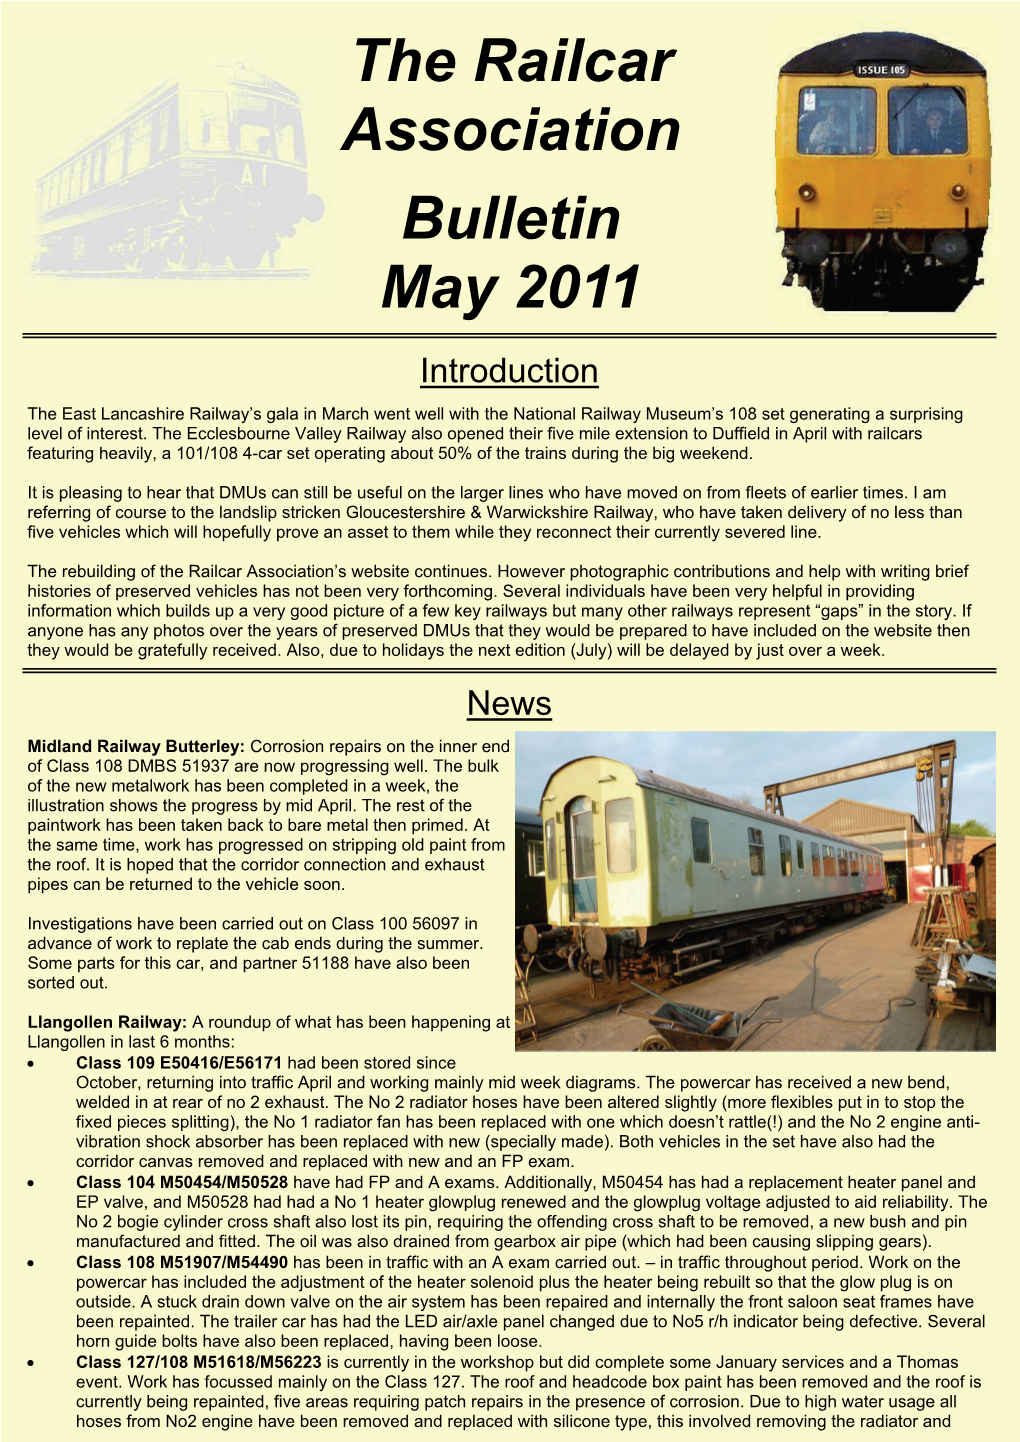 The Railcar Association Bulletin May 2011